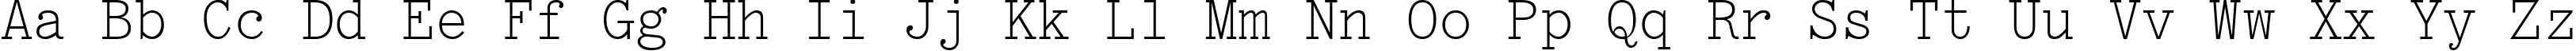 Пример написания английского алфавита шрифтом OptimusCTT